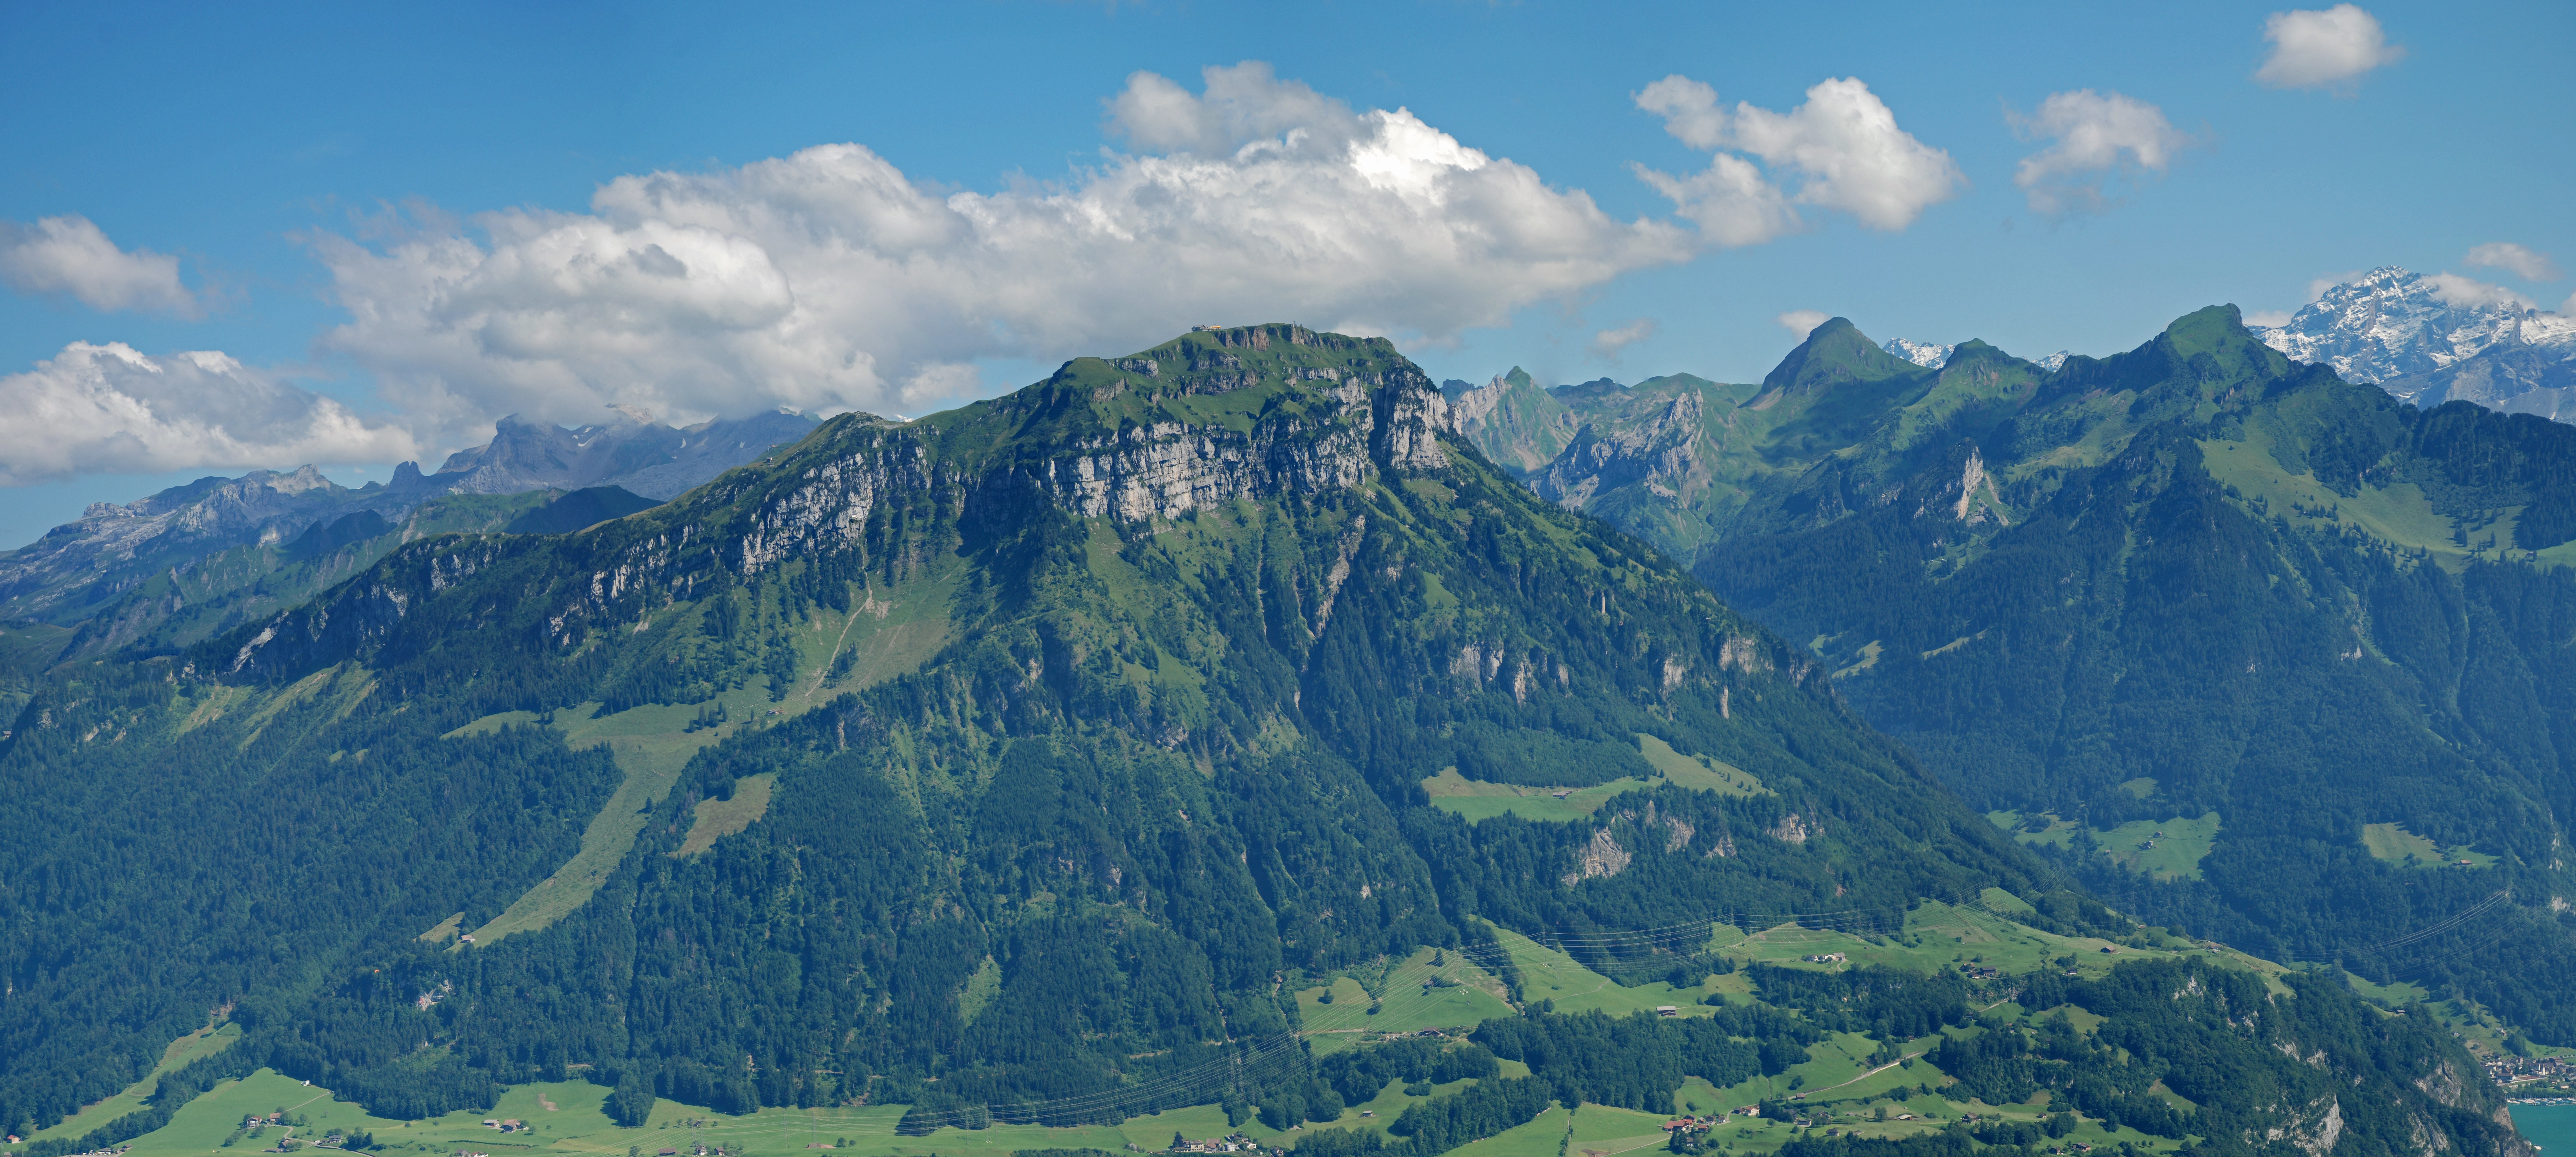 Big jpg image. Гора Фрональпшток Швейцария. Фроналпсток. Big image. Биг jpg.